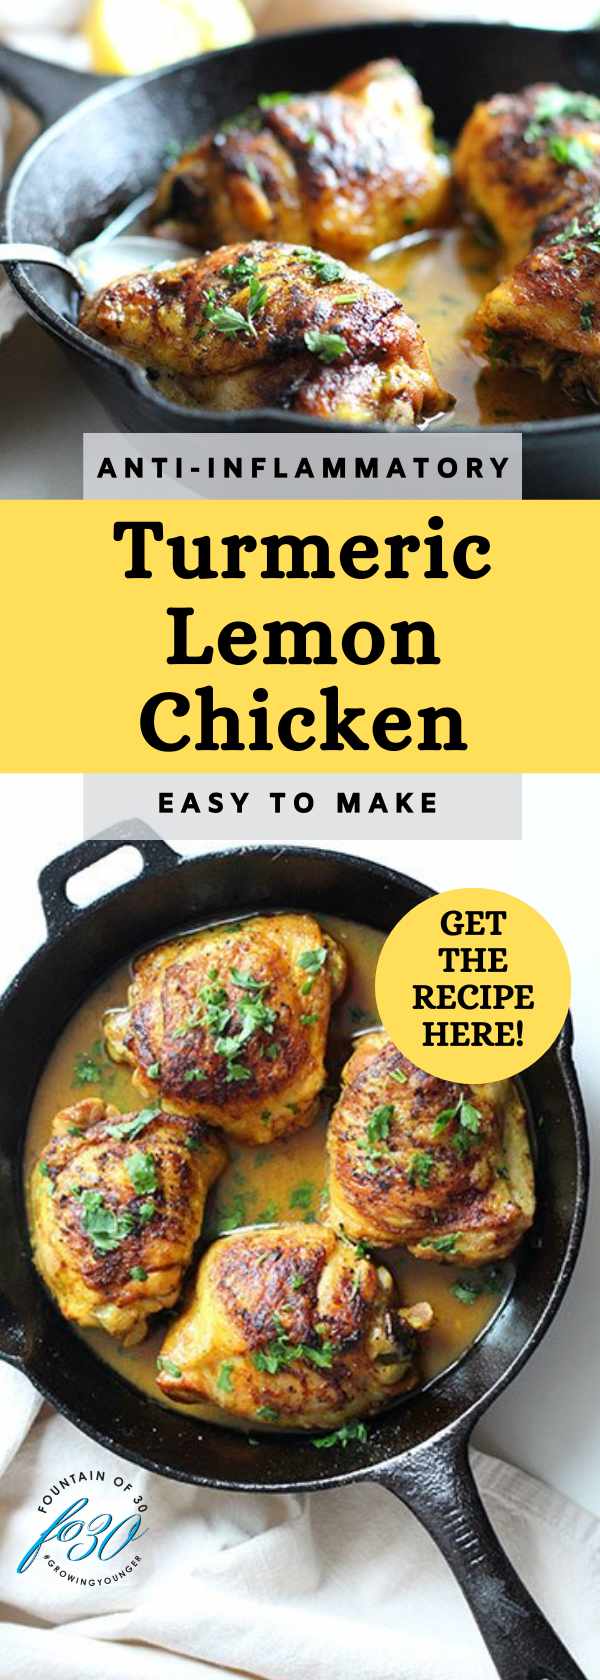 turmeric lemon chicken recipe easy to make fountainof30